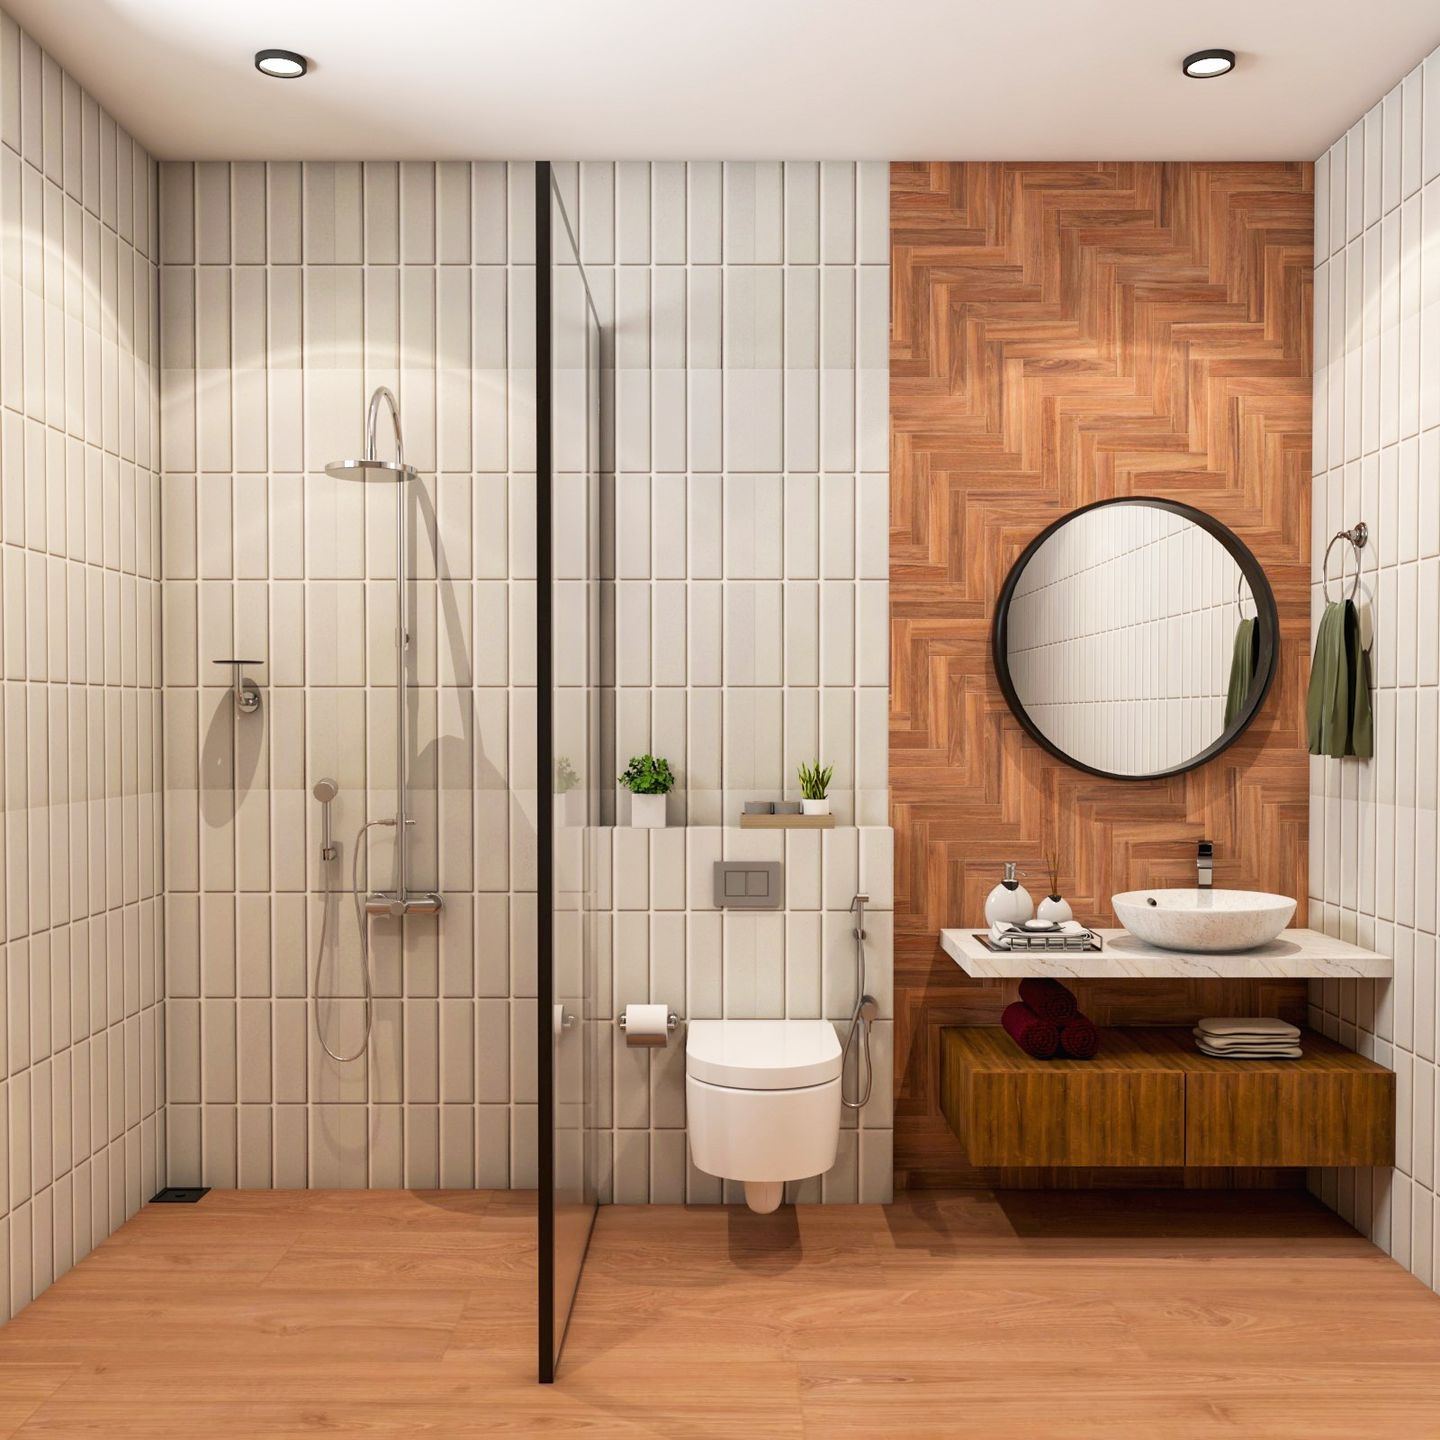 Ceramic Rectangular White Tile Design For Bathroom And Kitchen Wall - Livspace